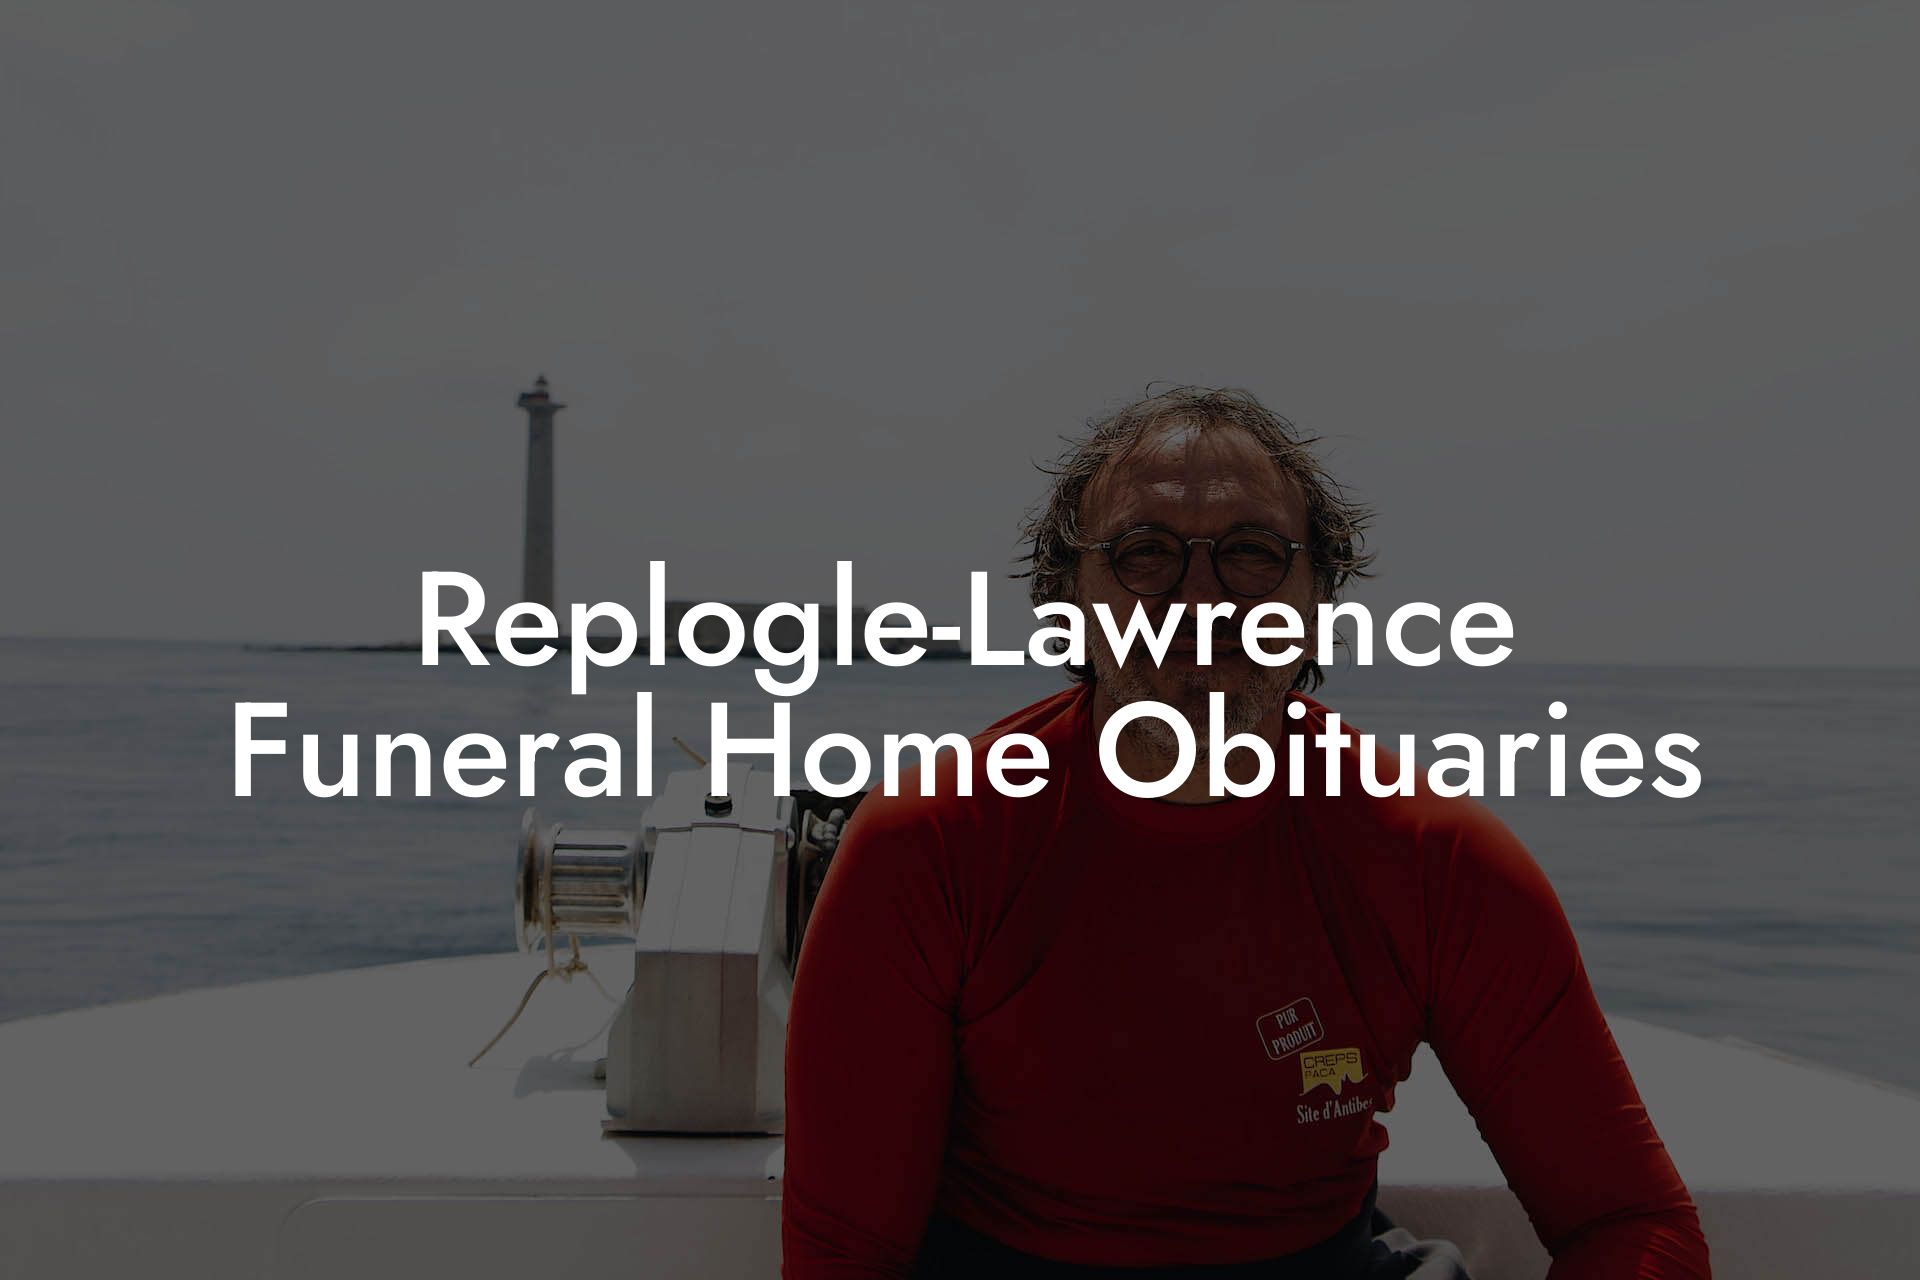 Replogle-Lawrence Funeral Home Obituaries